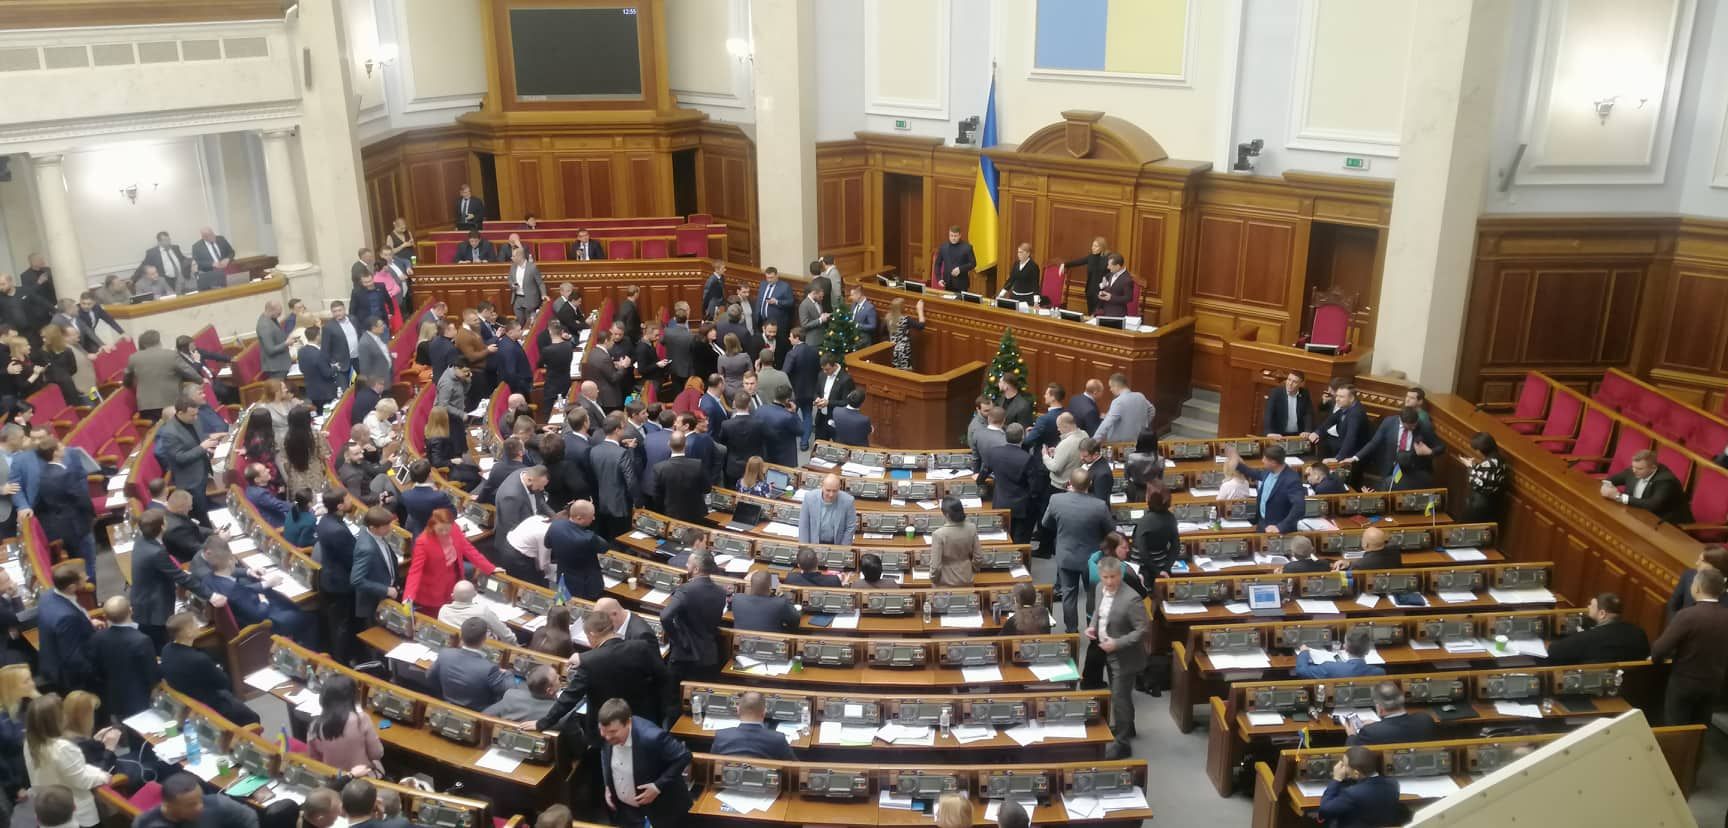 Тимошенко в Раде заблокировала президиум и заняла место Разумкова: видео